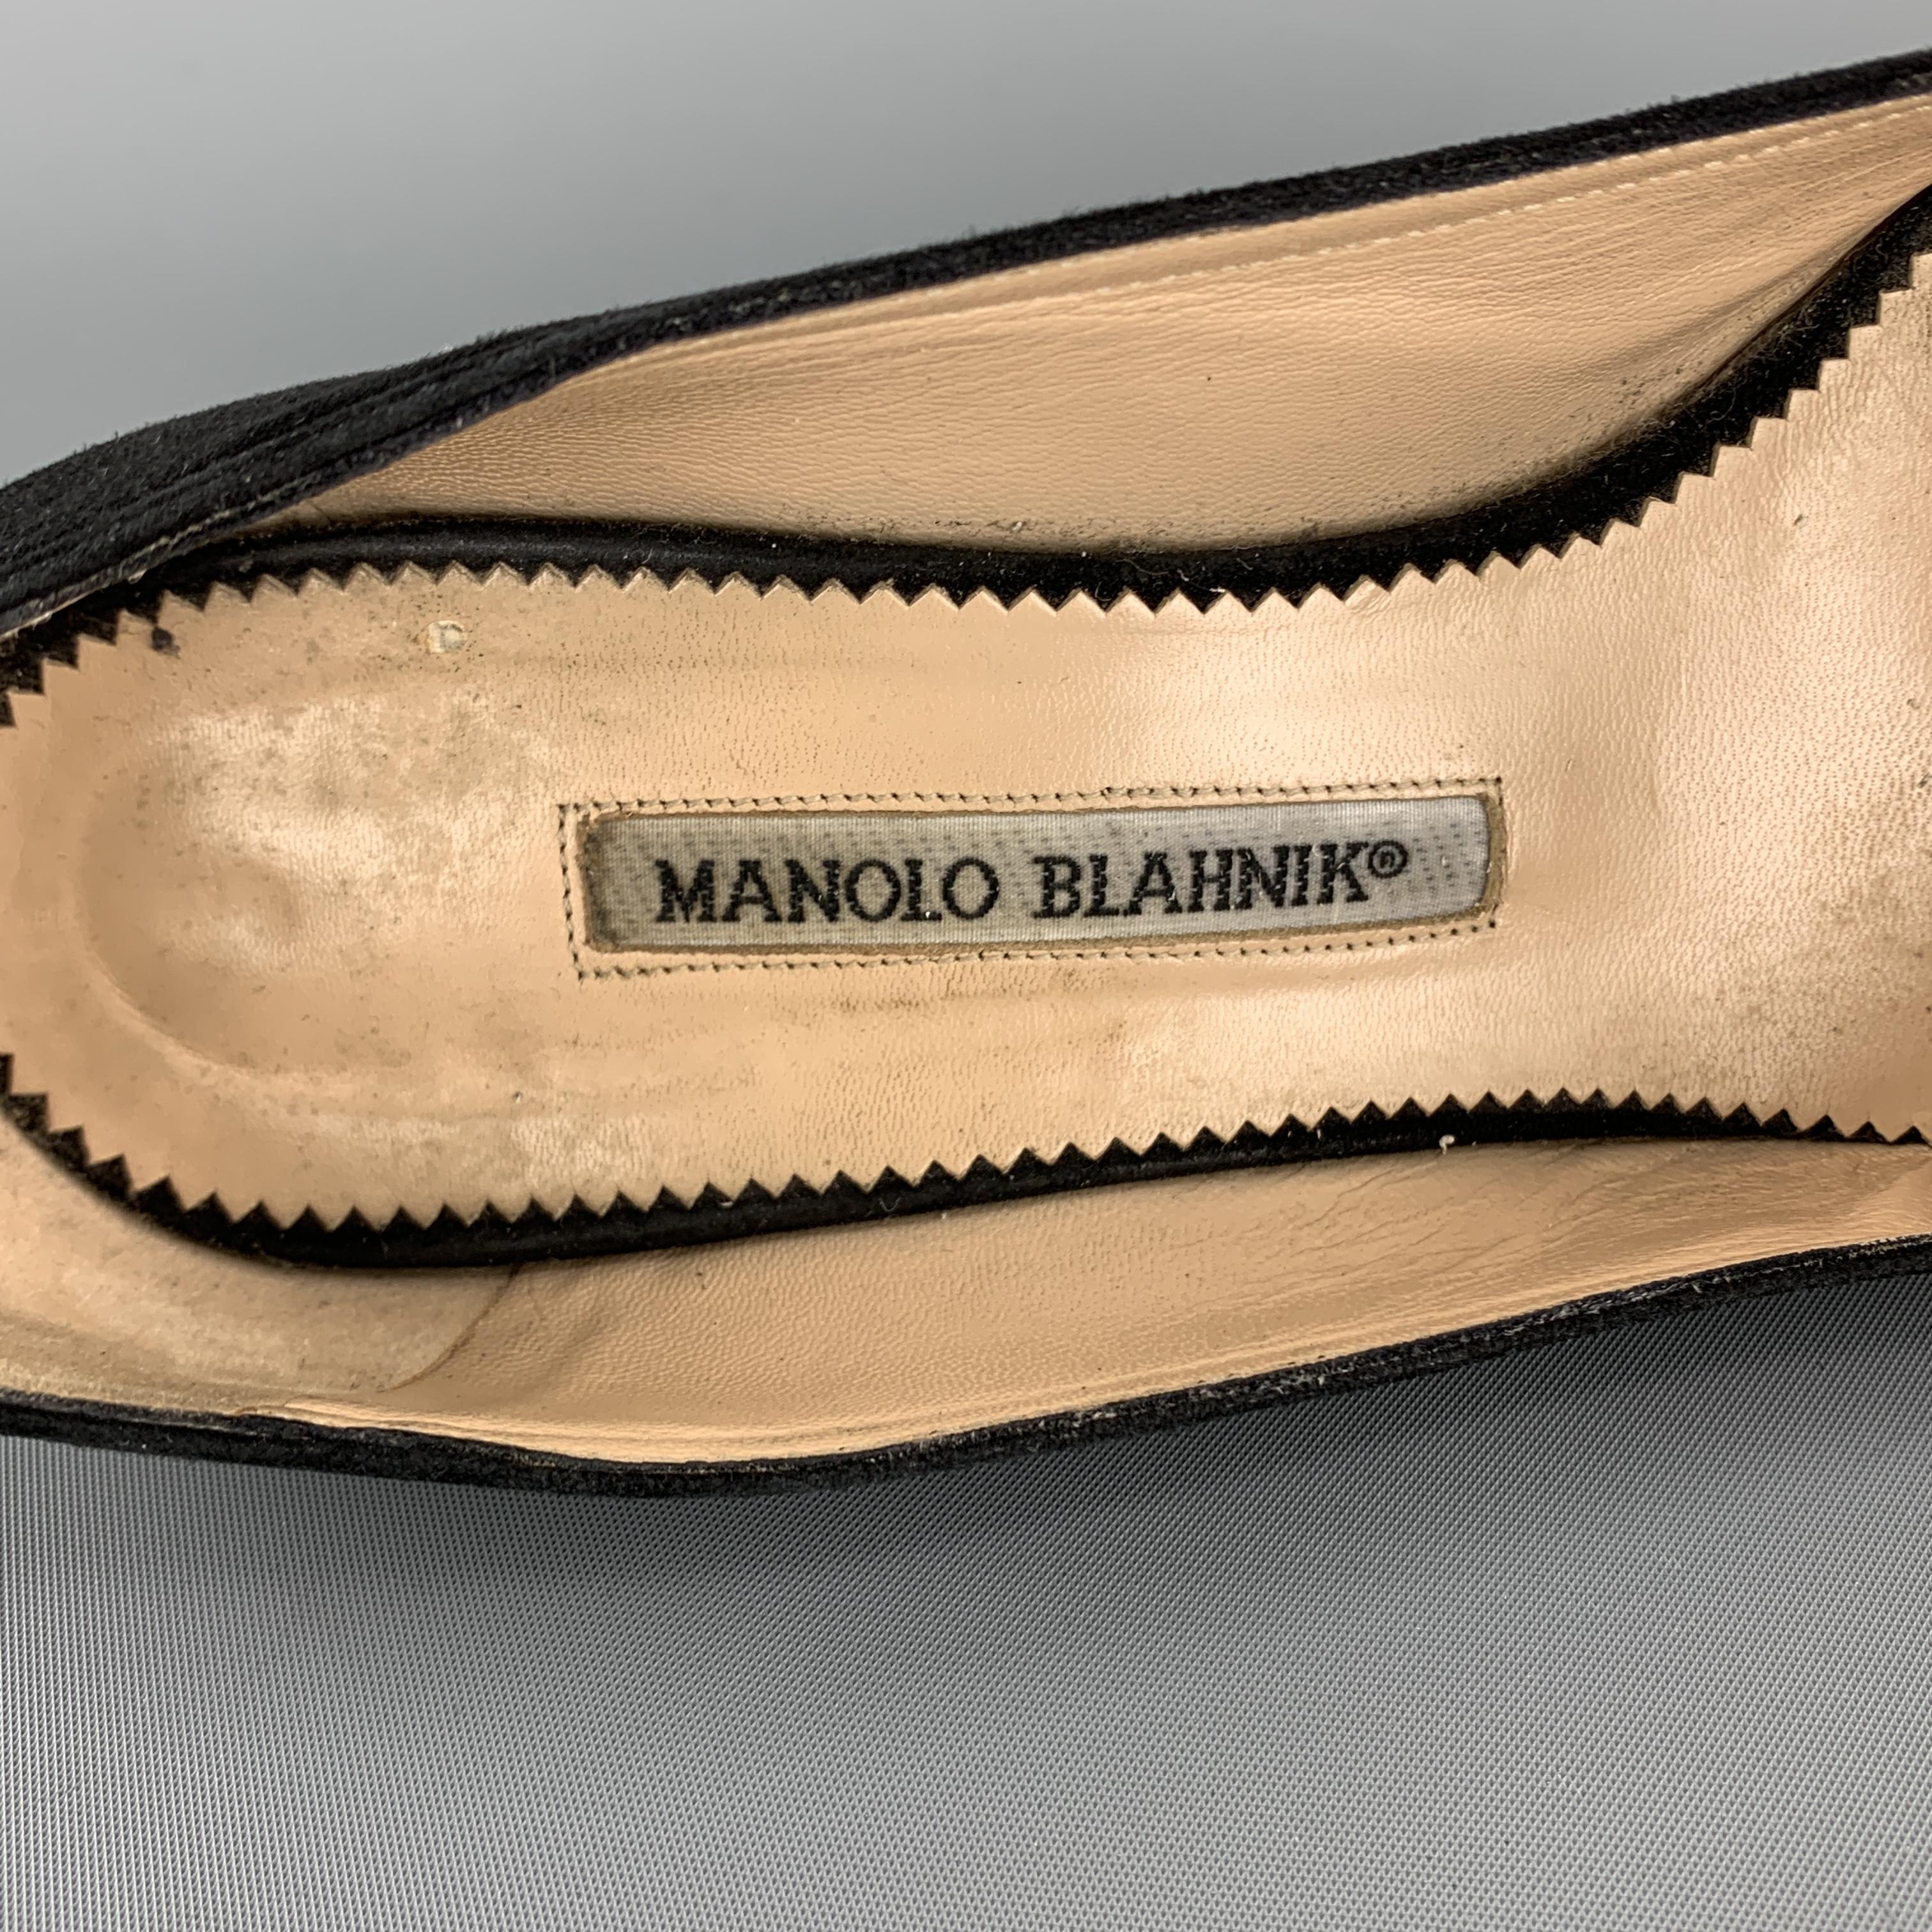 MANOLO BLAHNIK Size 7 Black Suede Ruffle Toe Pointed Pumps 2